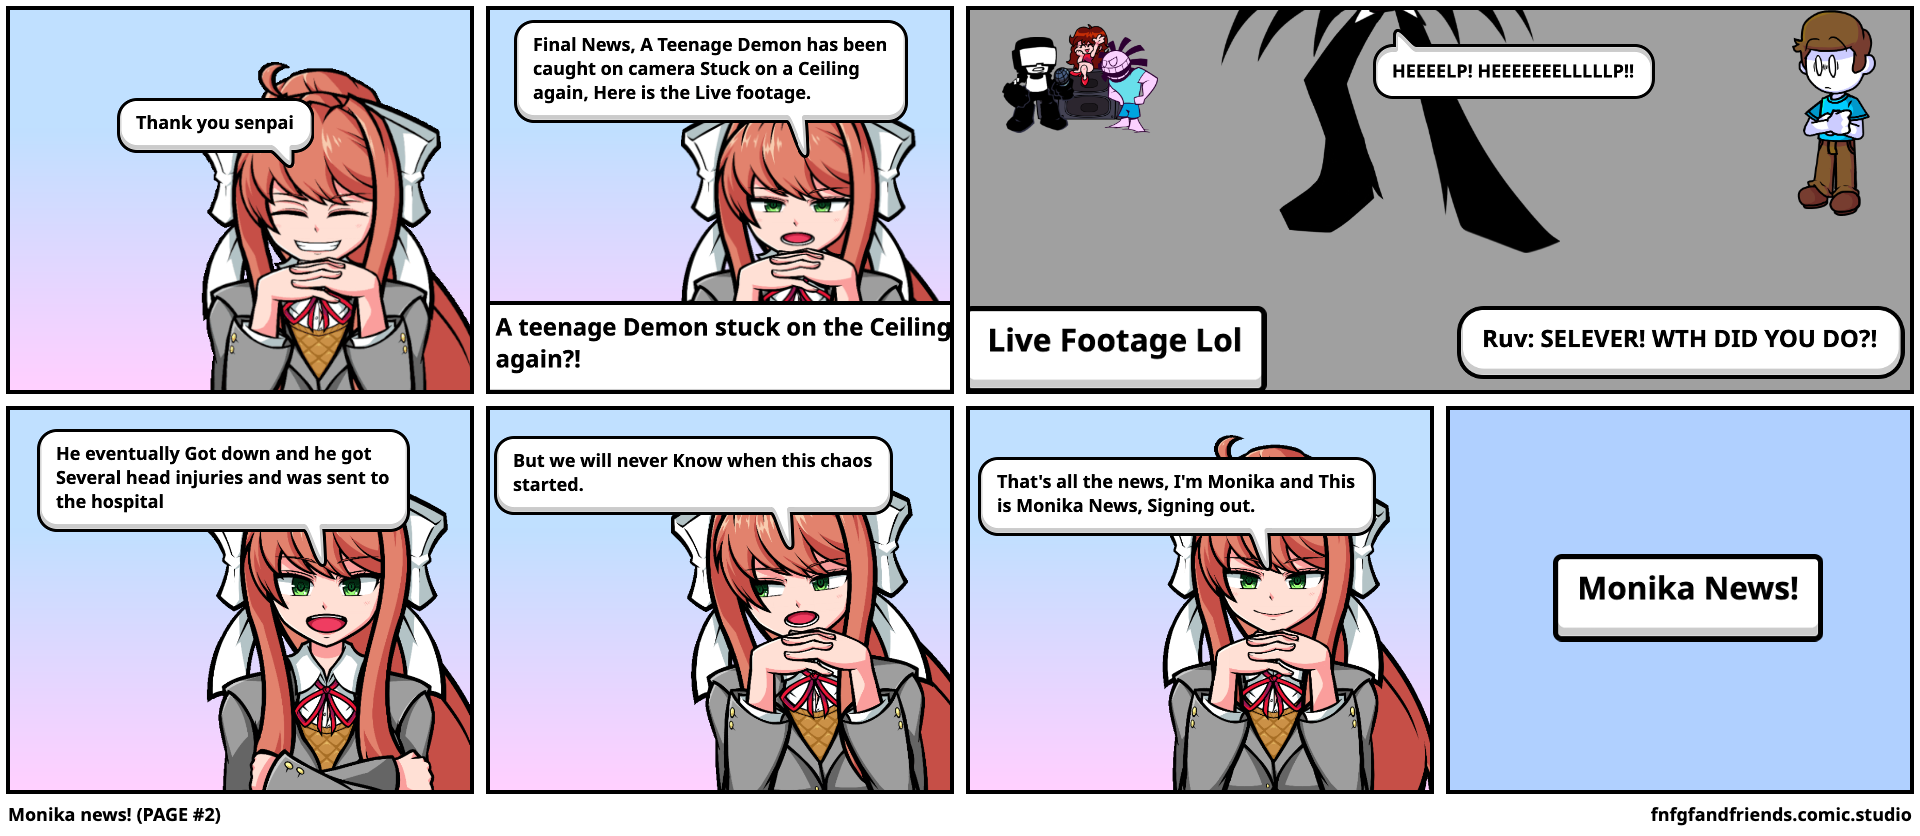 I went back to Monika After Story - Comic Studio